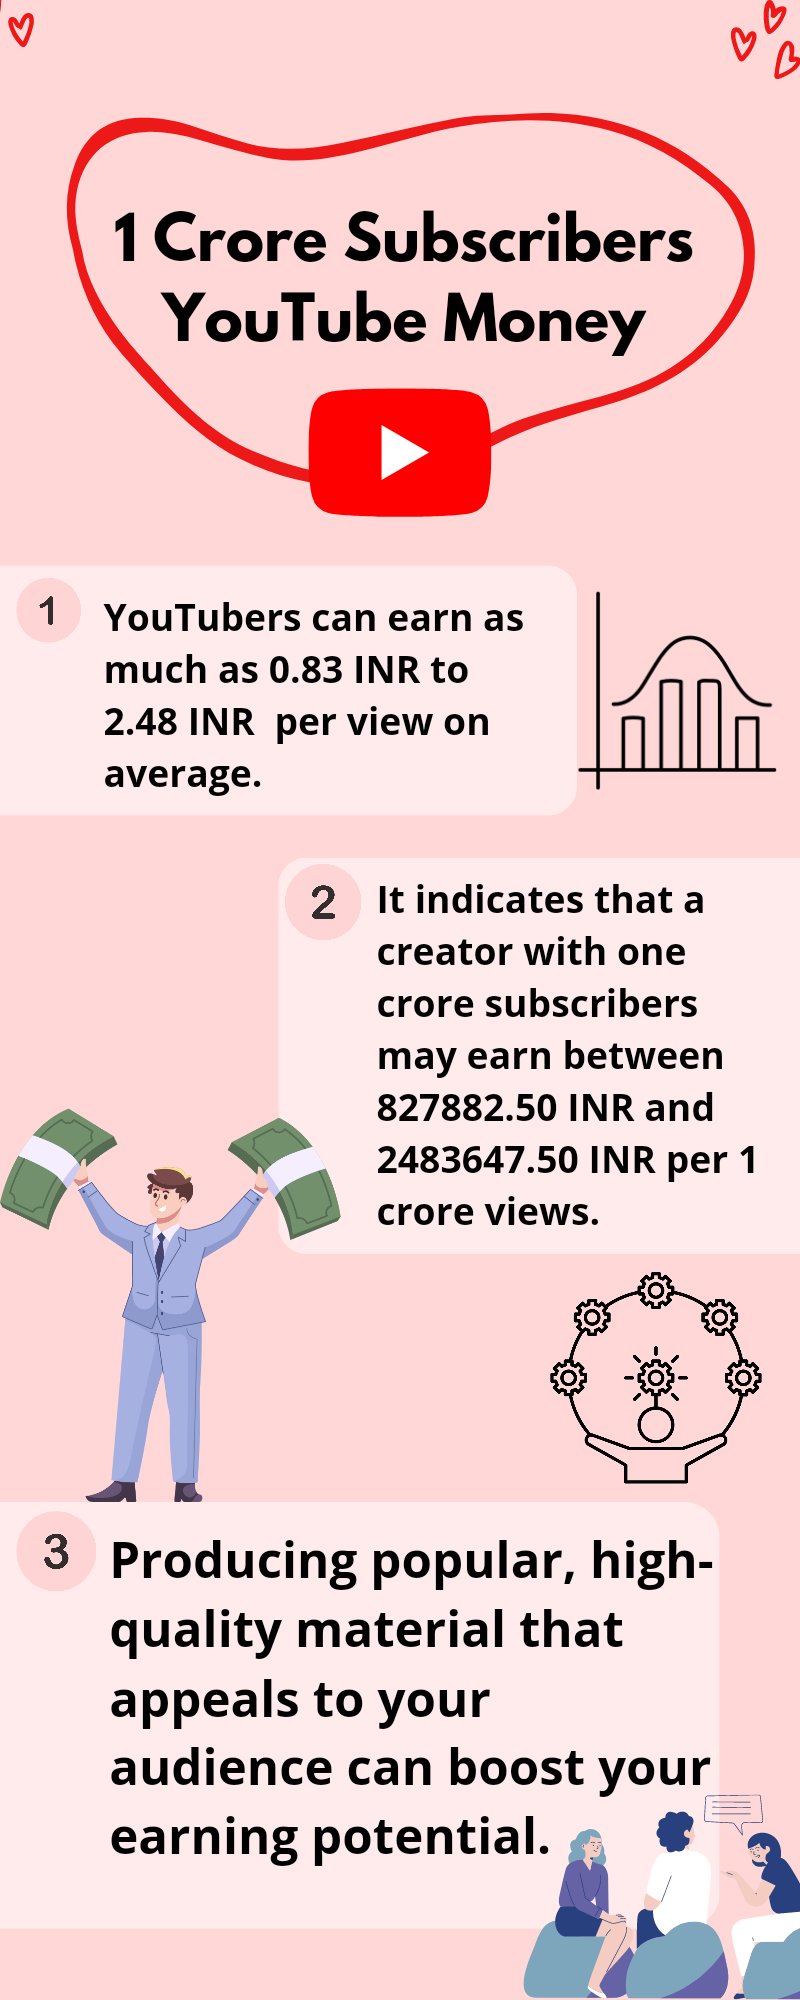 1 Crore Subscribers YouTube Money